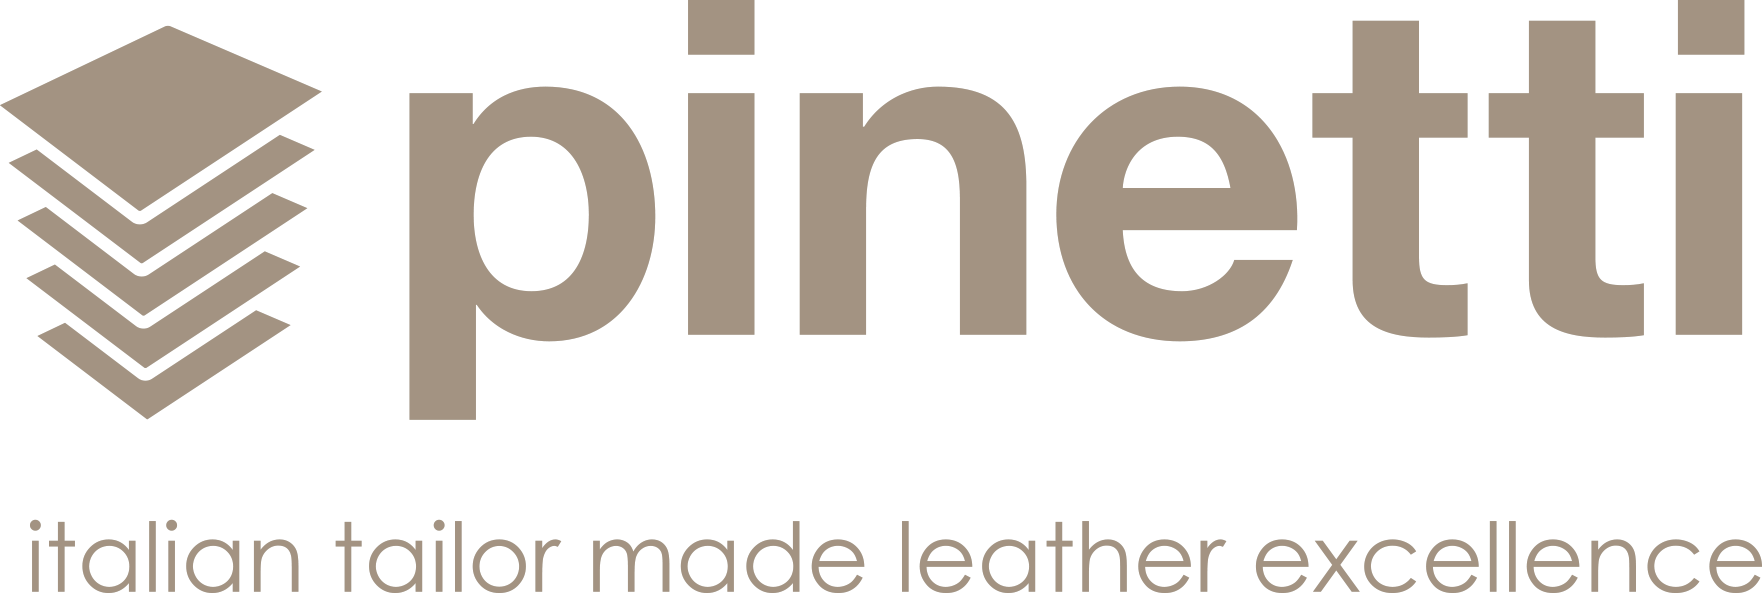 Pinetti logo